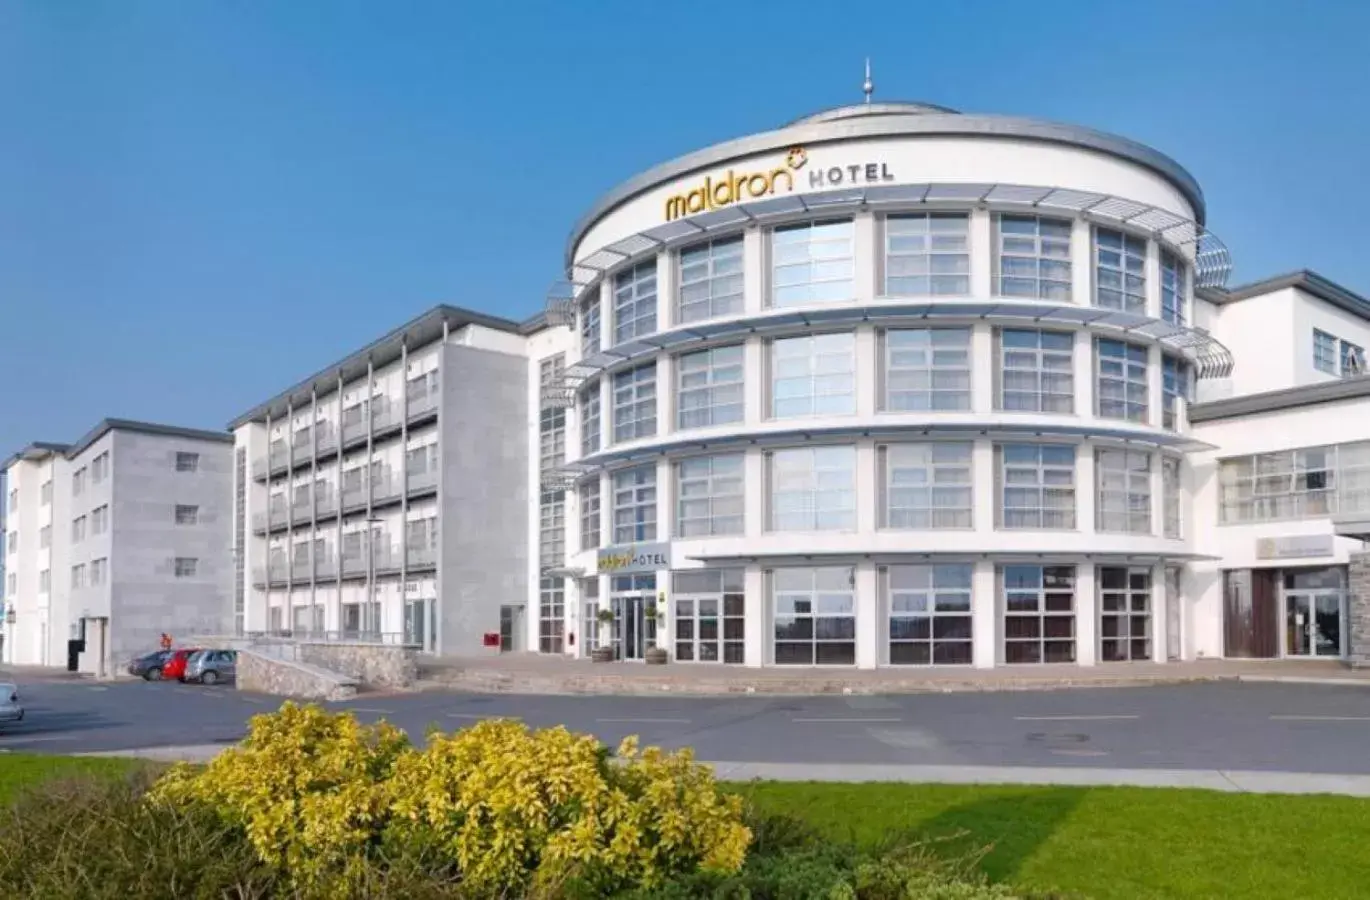 Property Building in Maldron Hotel & Leisure Centre Limerick